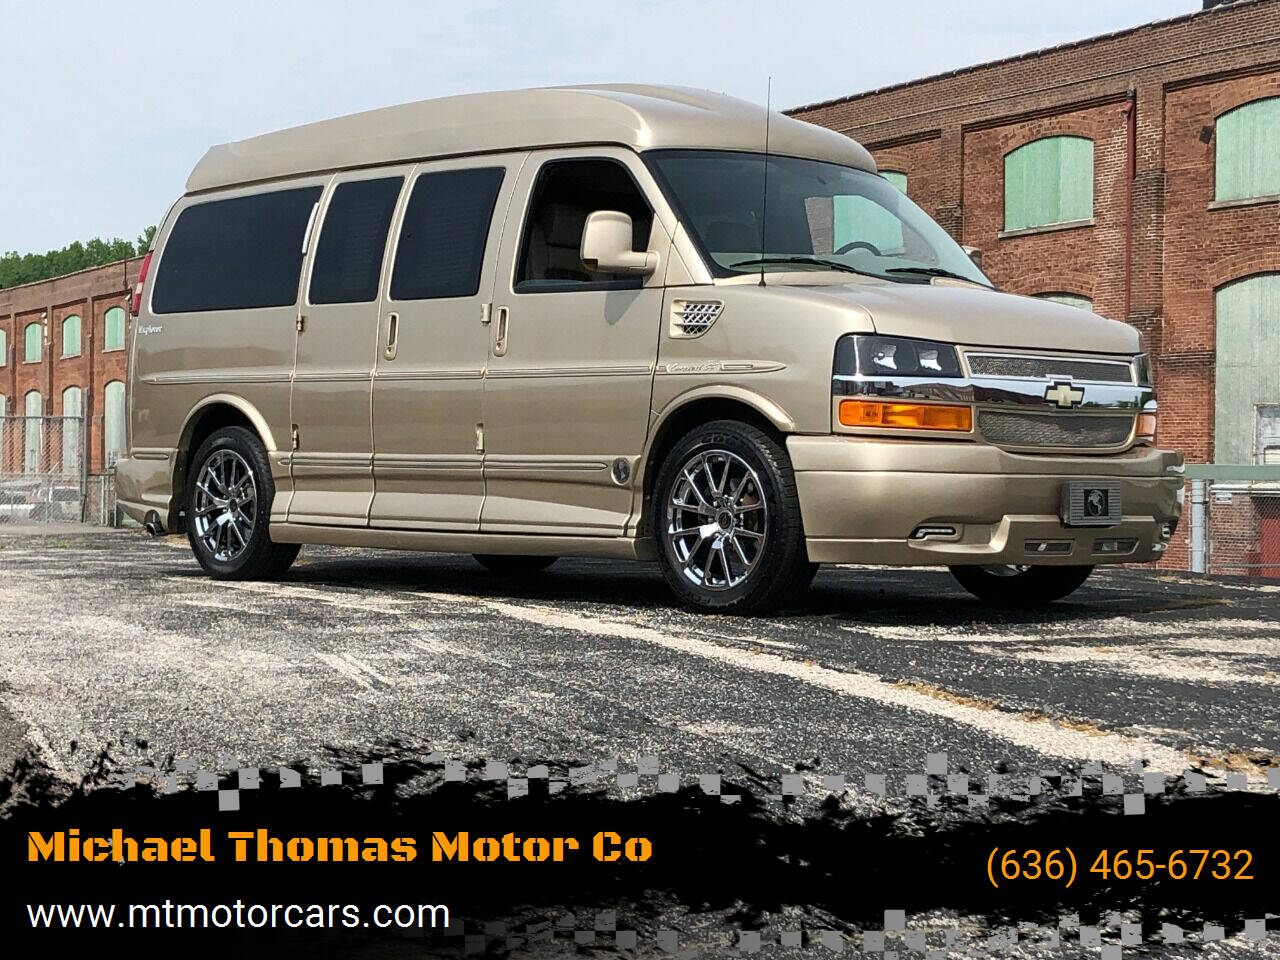 Conversion Van For Sale In Saint MO - Carsforsale.com®